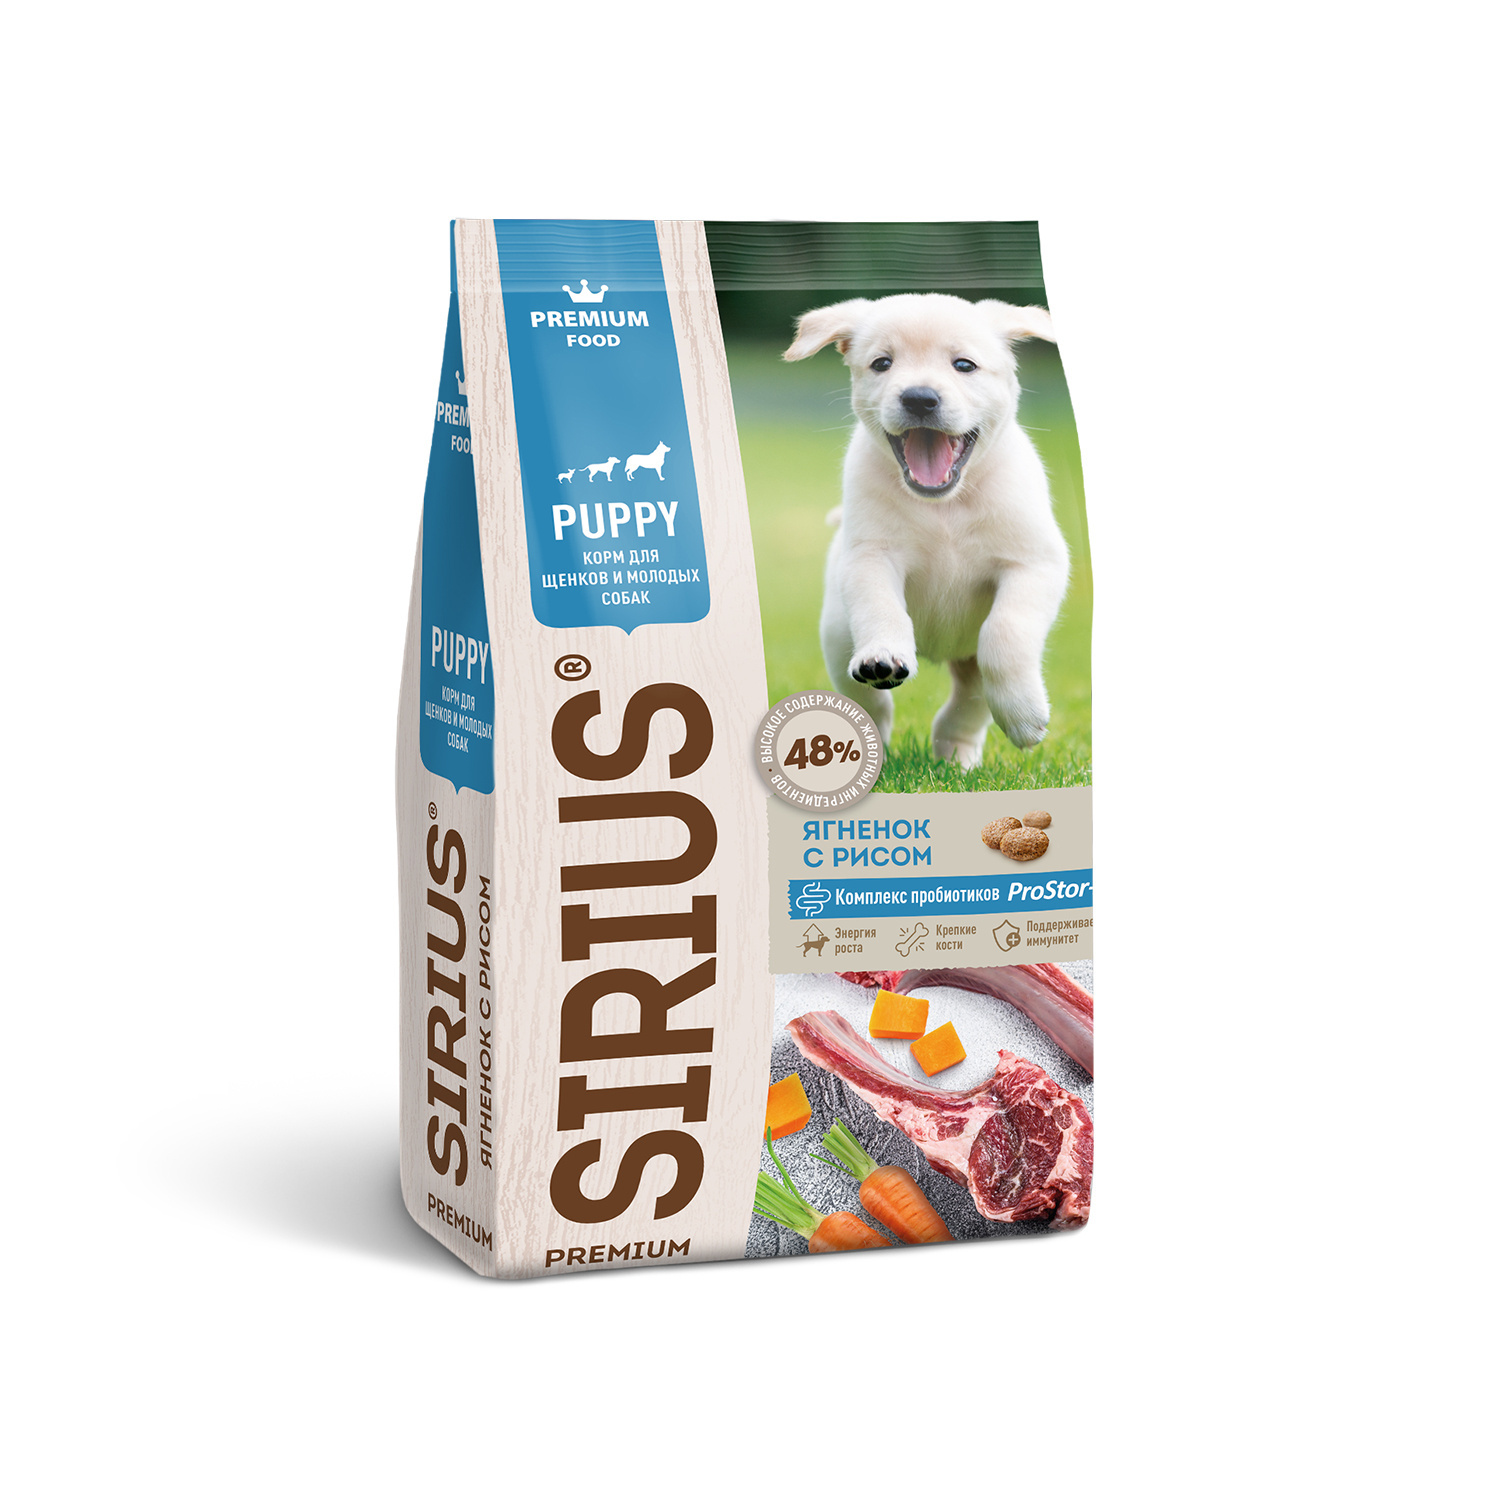 Sirius Sirius сухой корм для щенков и молодых собак, ягненок с рисом (15 кг) sirius sirius сухой корм для собак говядина с овощами 15 кг